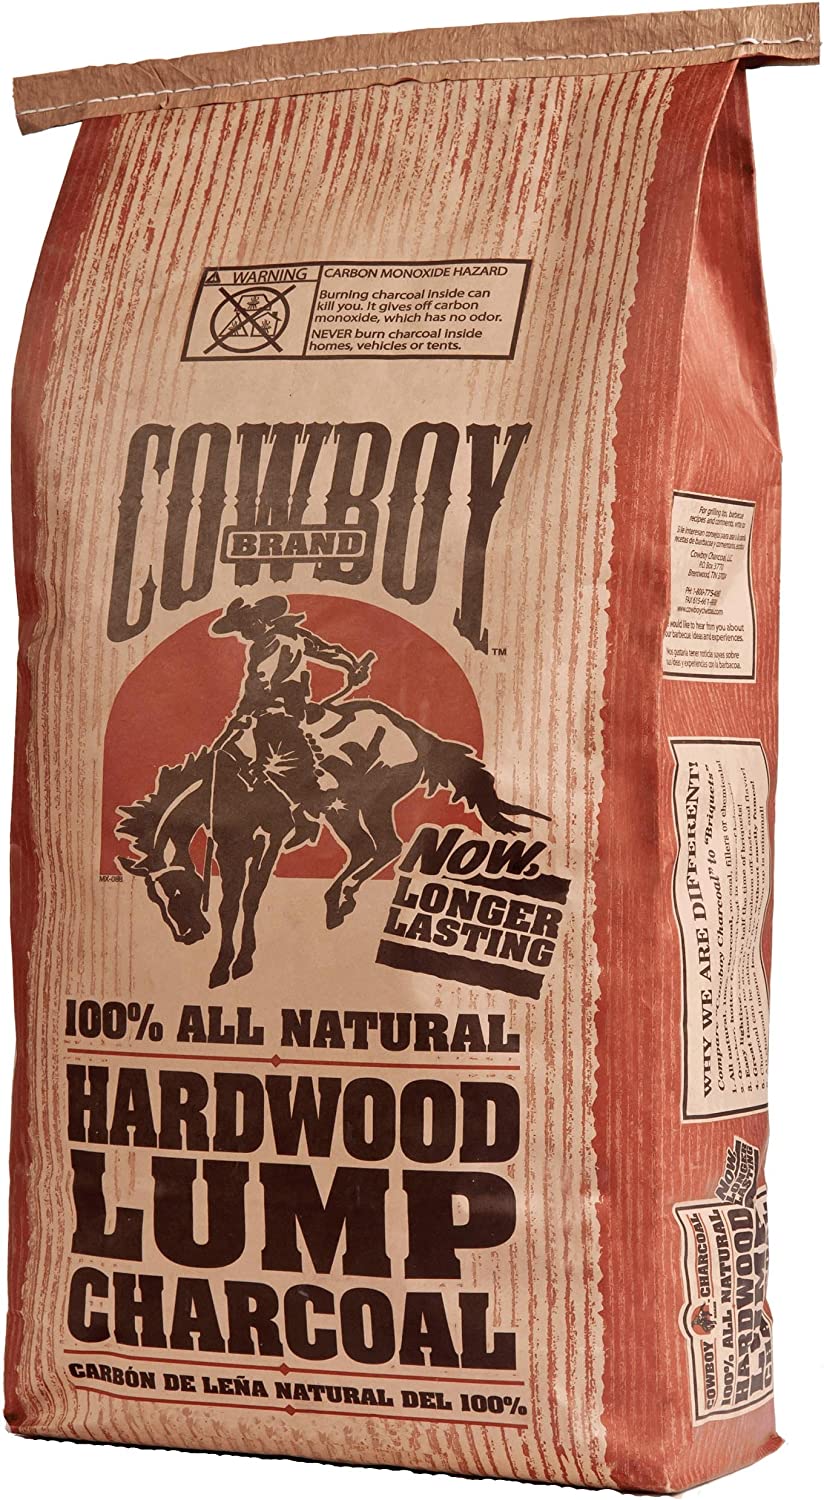 Cowboy 24220 All-Natural Hardwood Lump Charcoal, 20 Lb